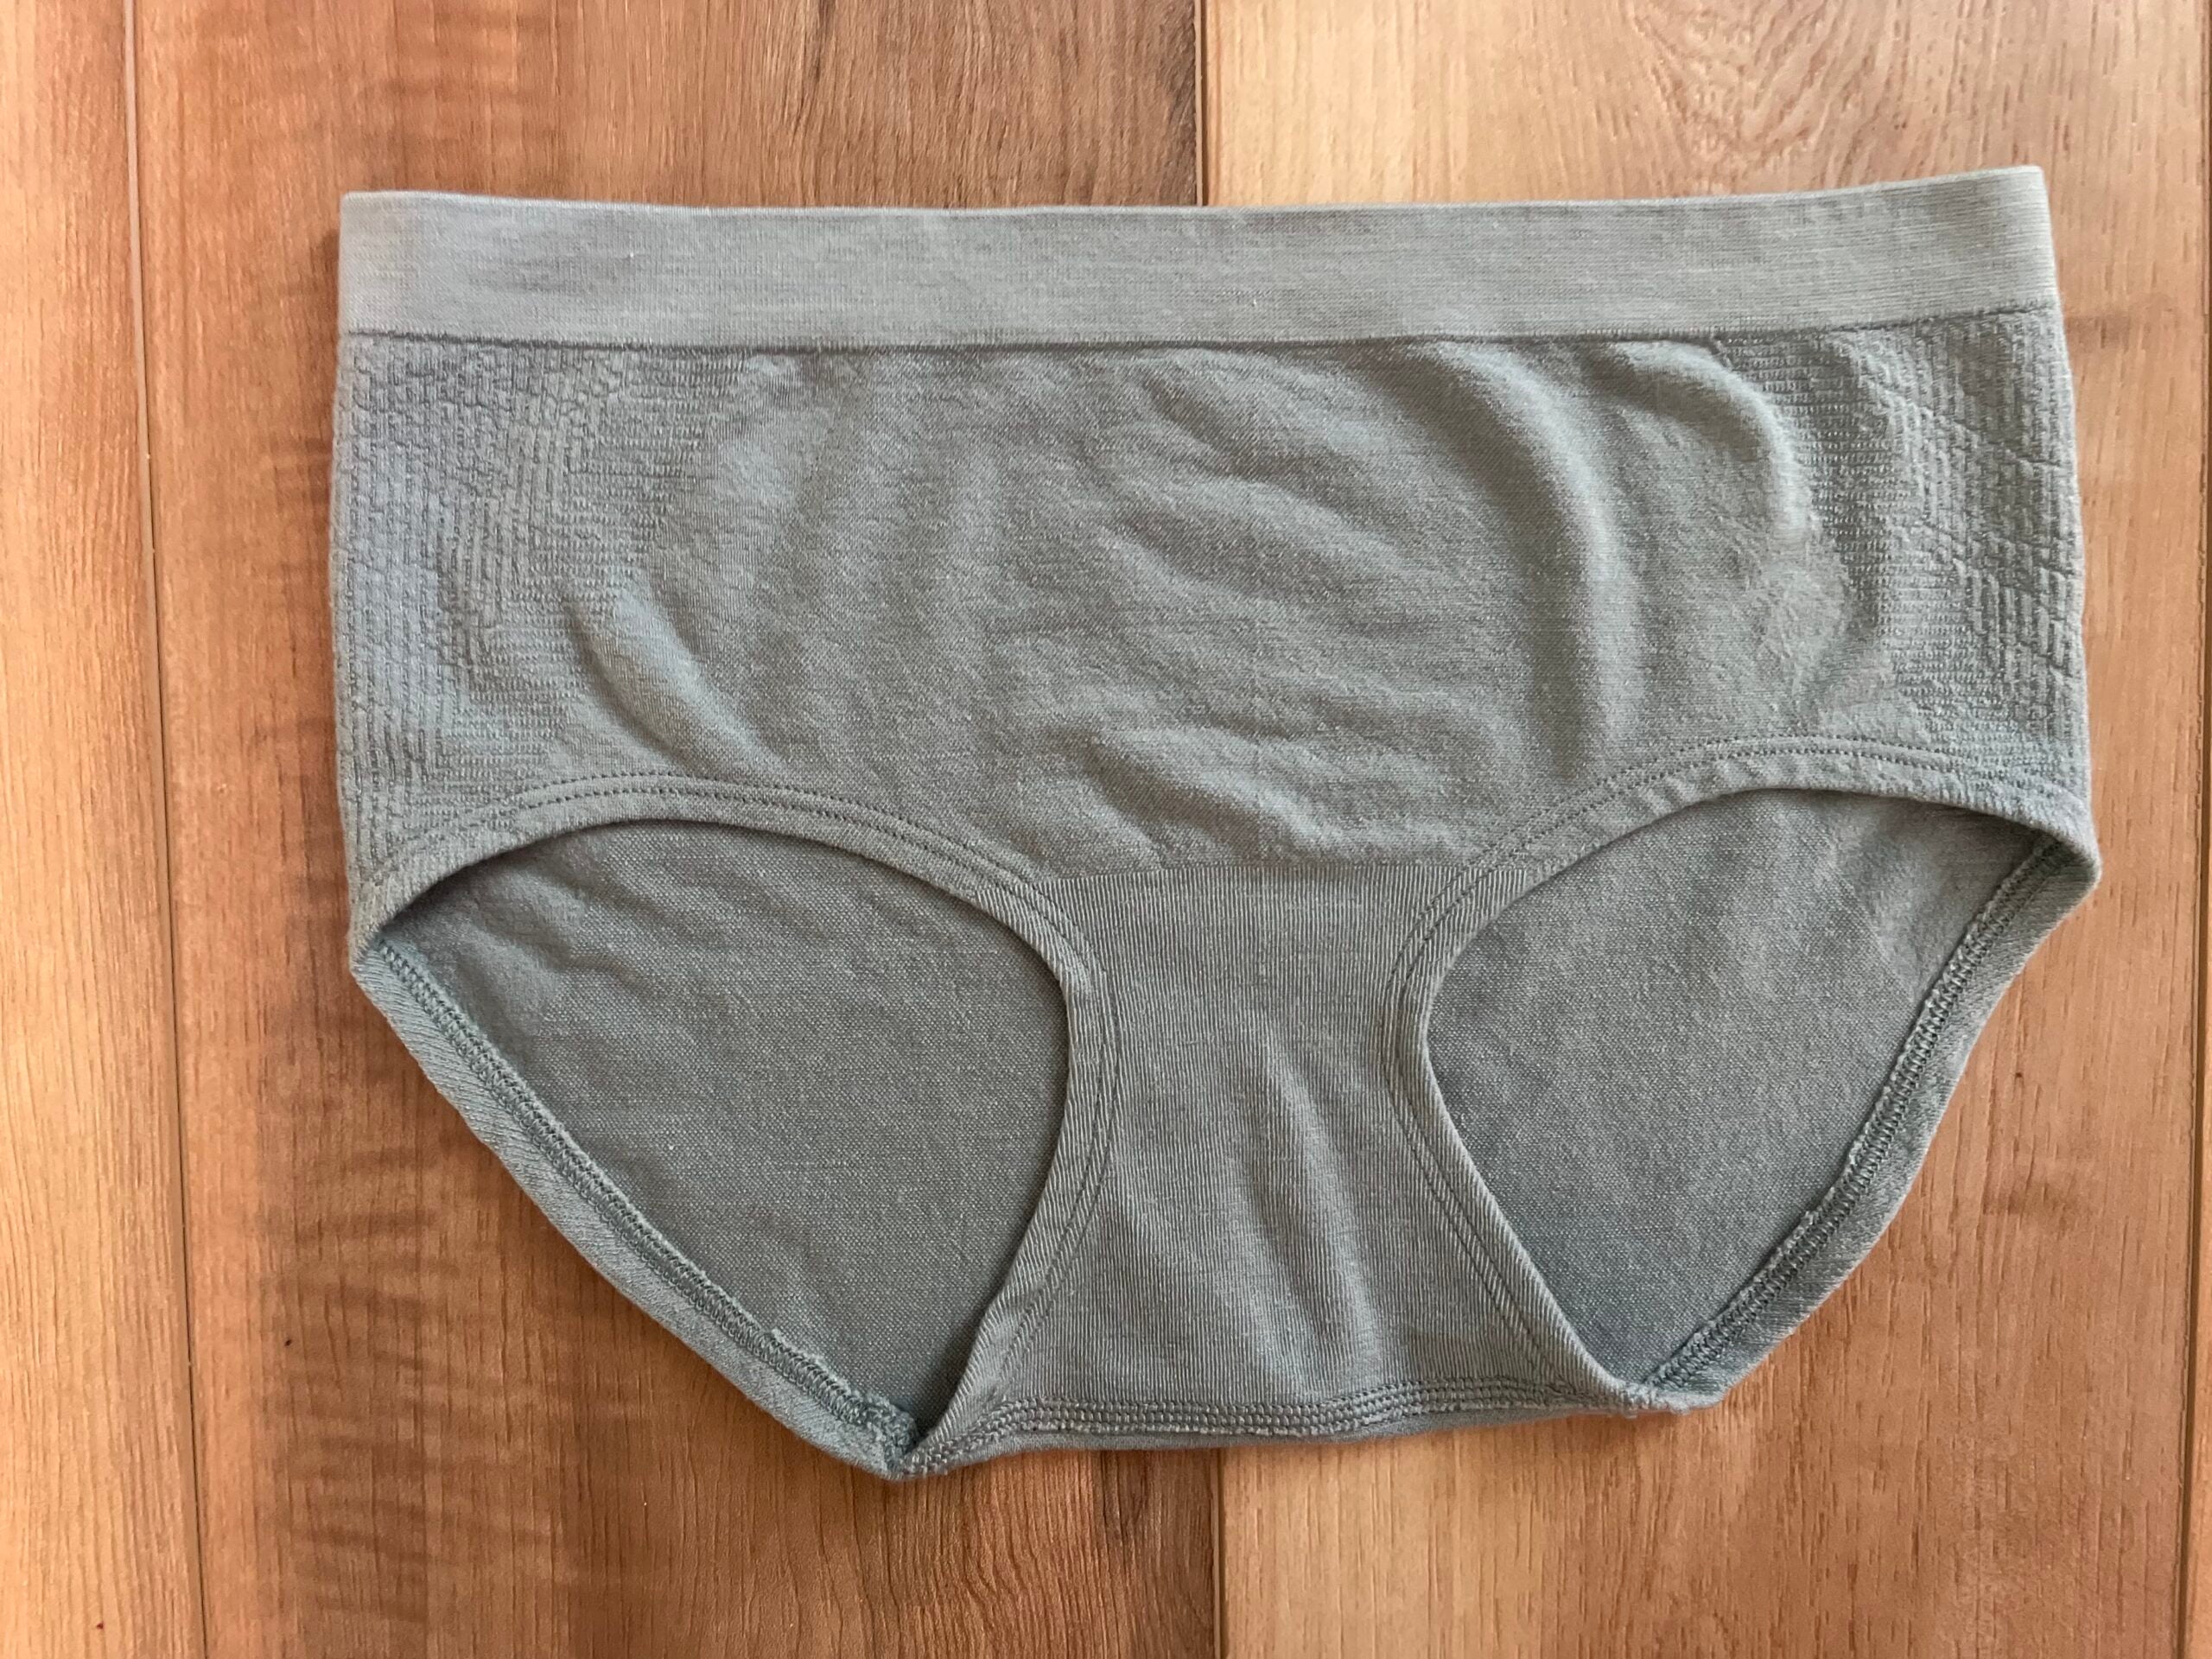 Women's Armachillo Cooling Hi-Cut Underwear